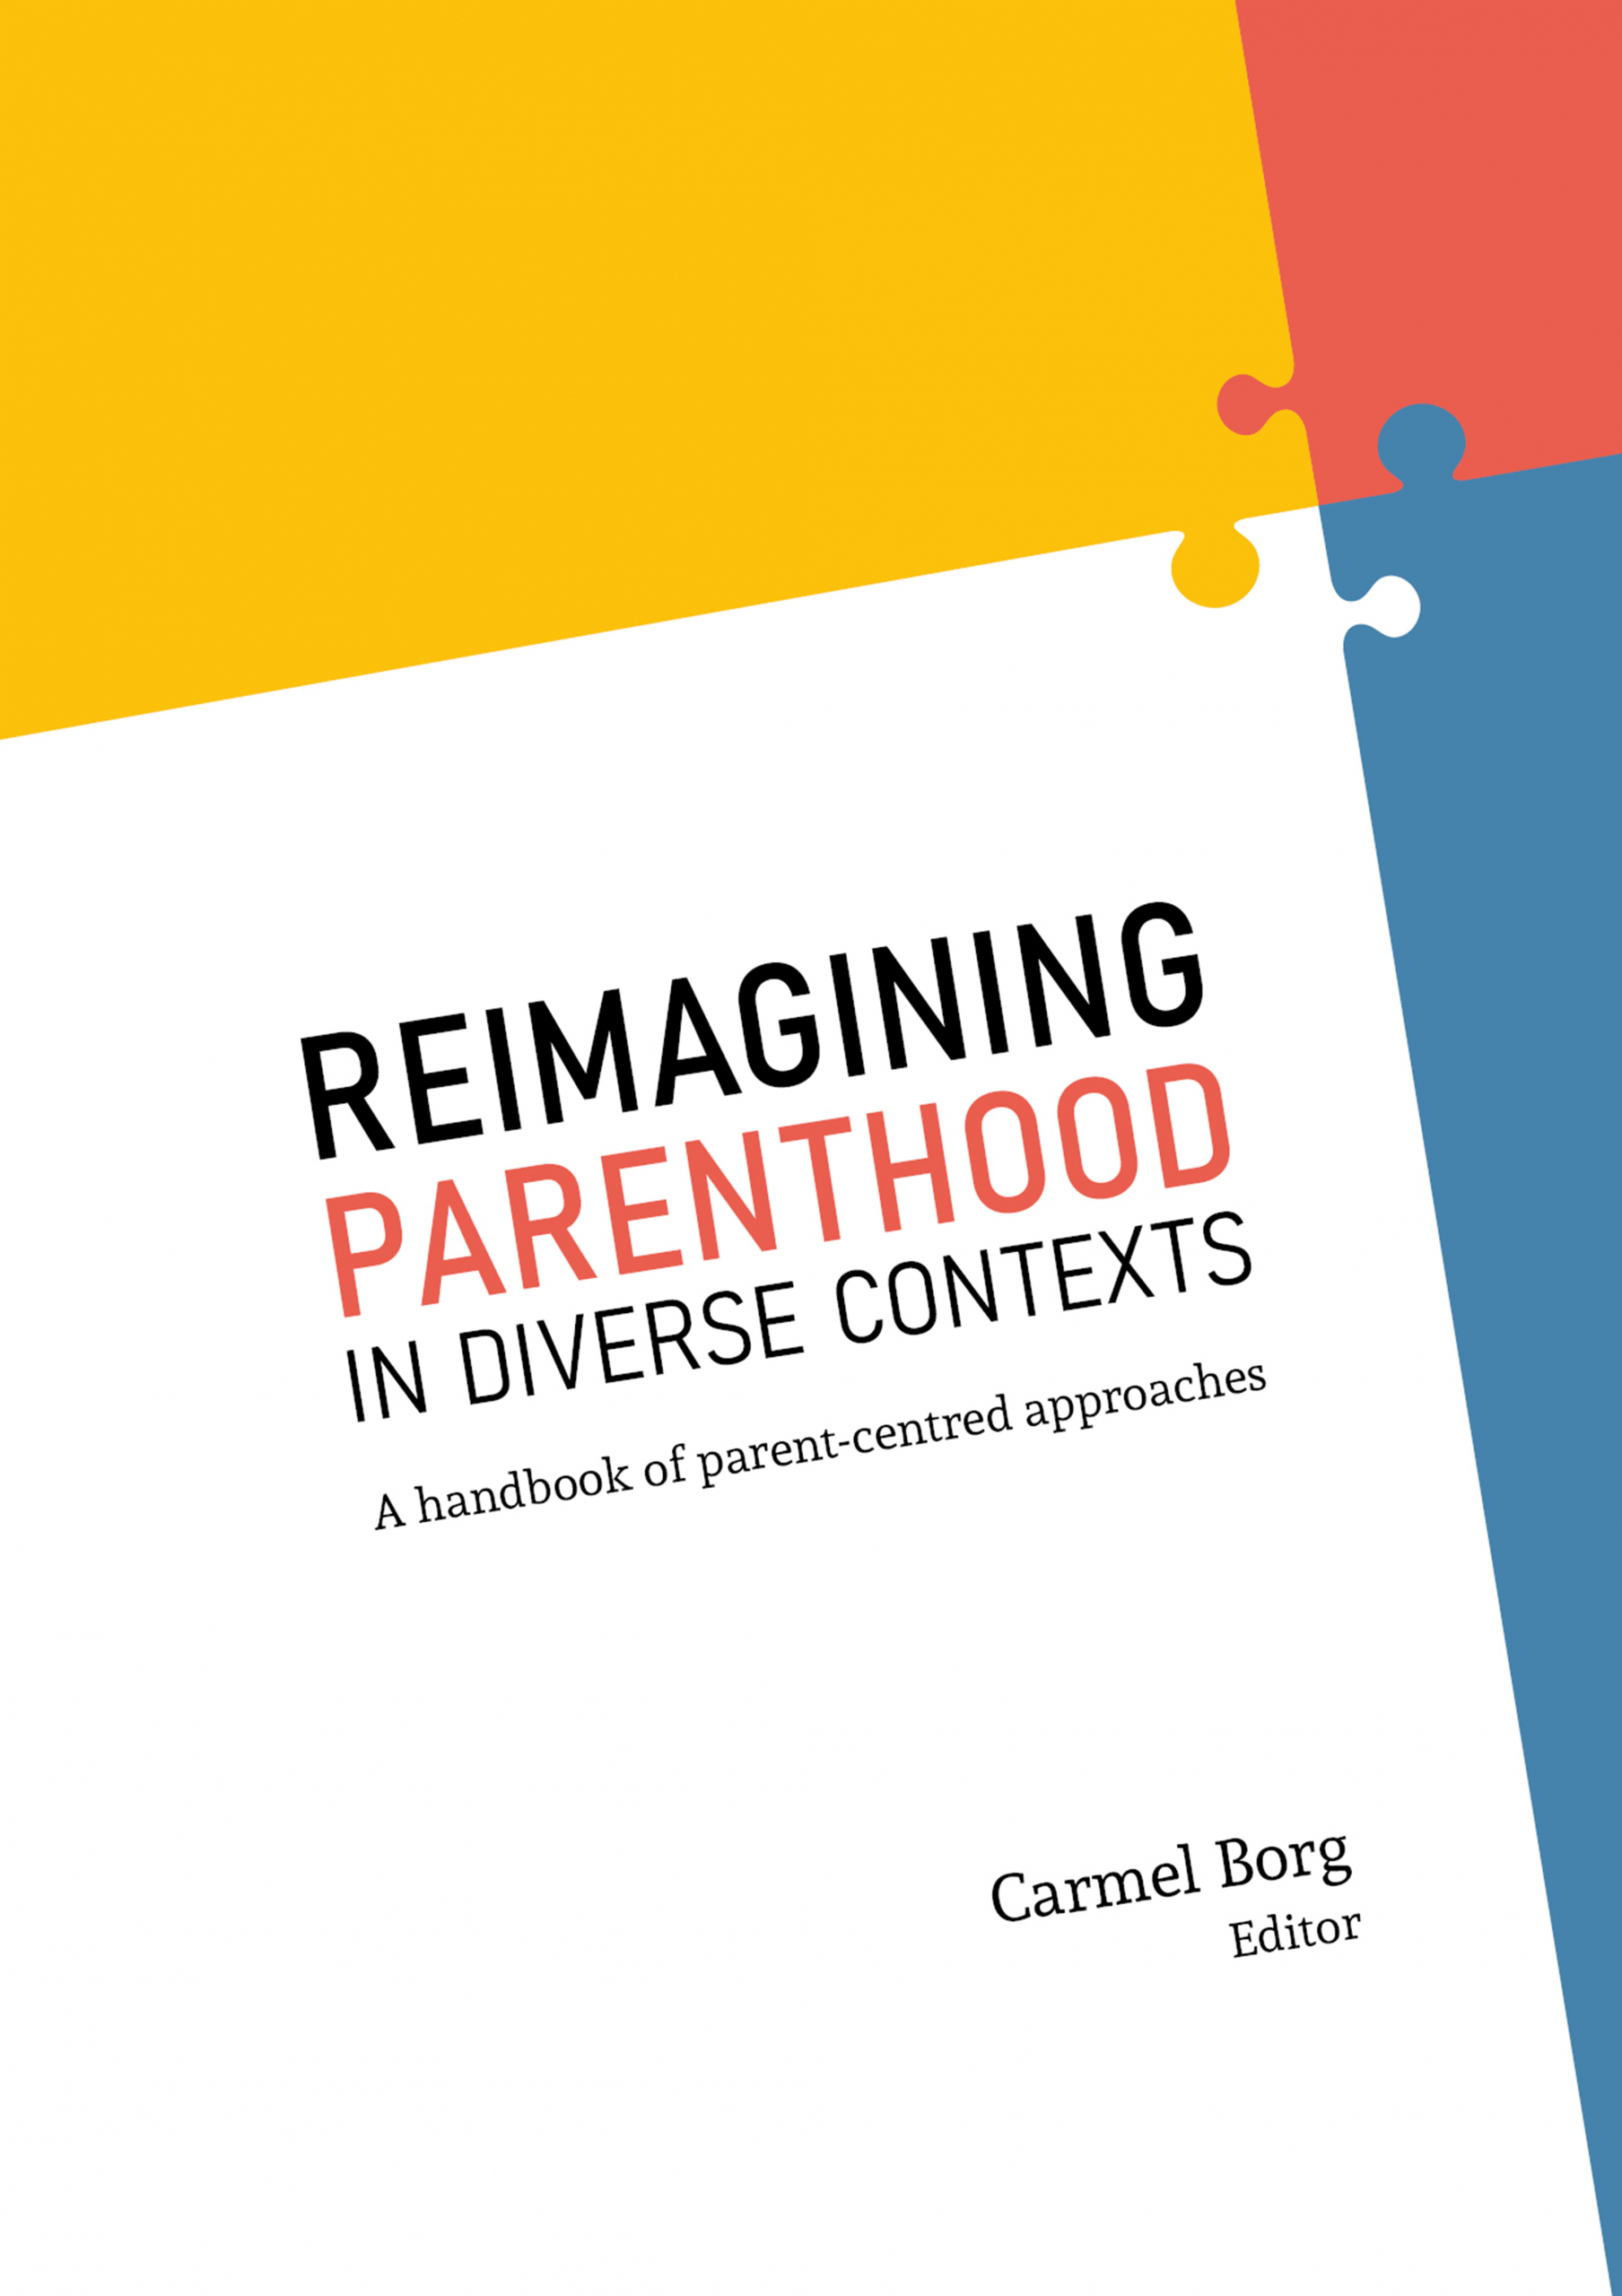 Reimagining parenthood in Diverse Contexts